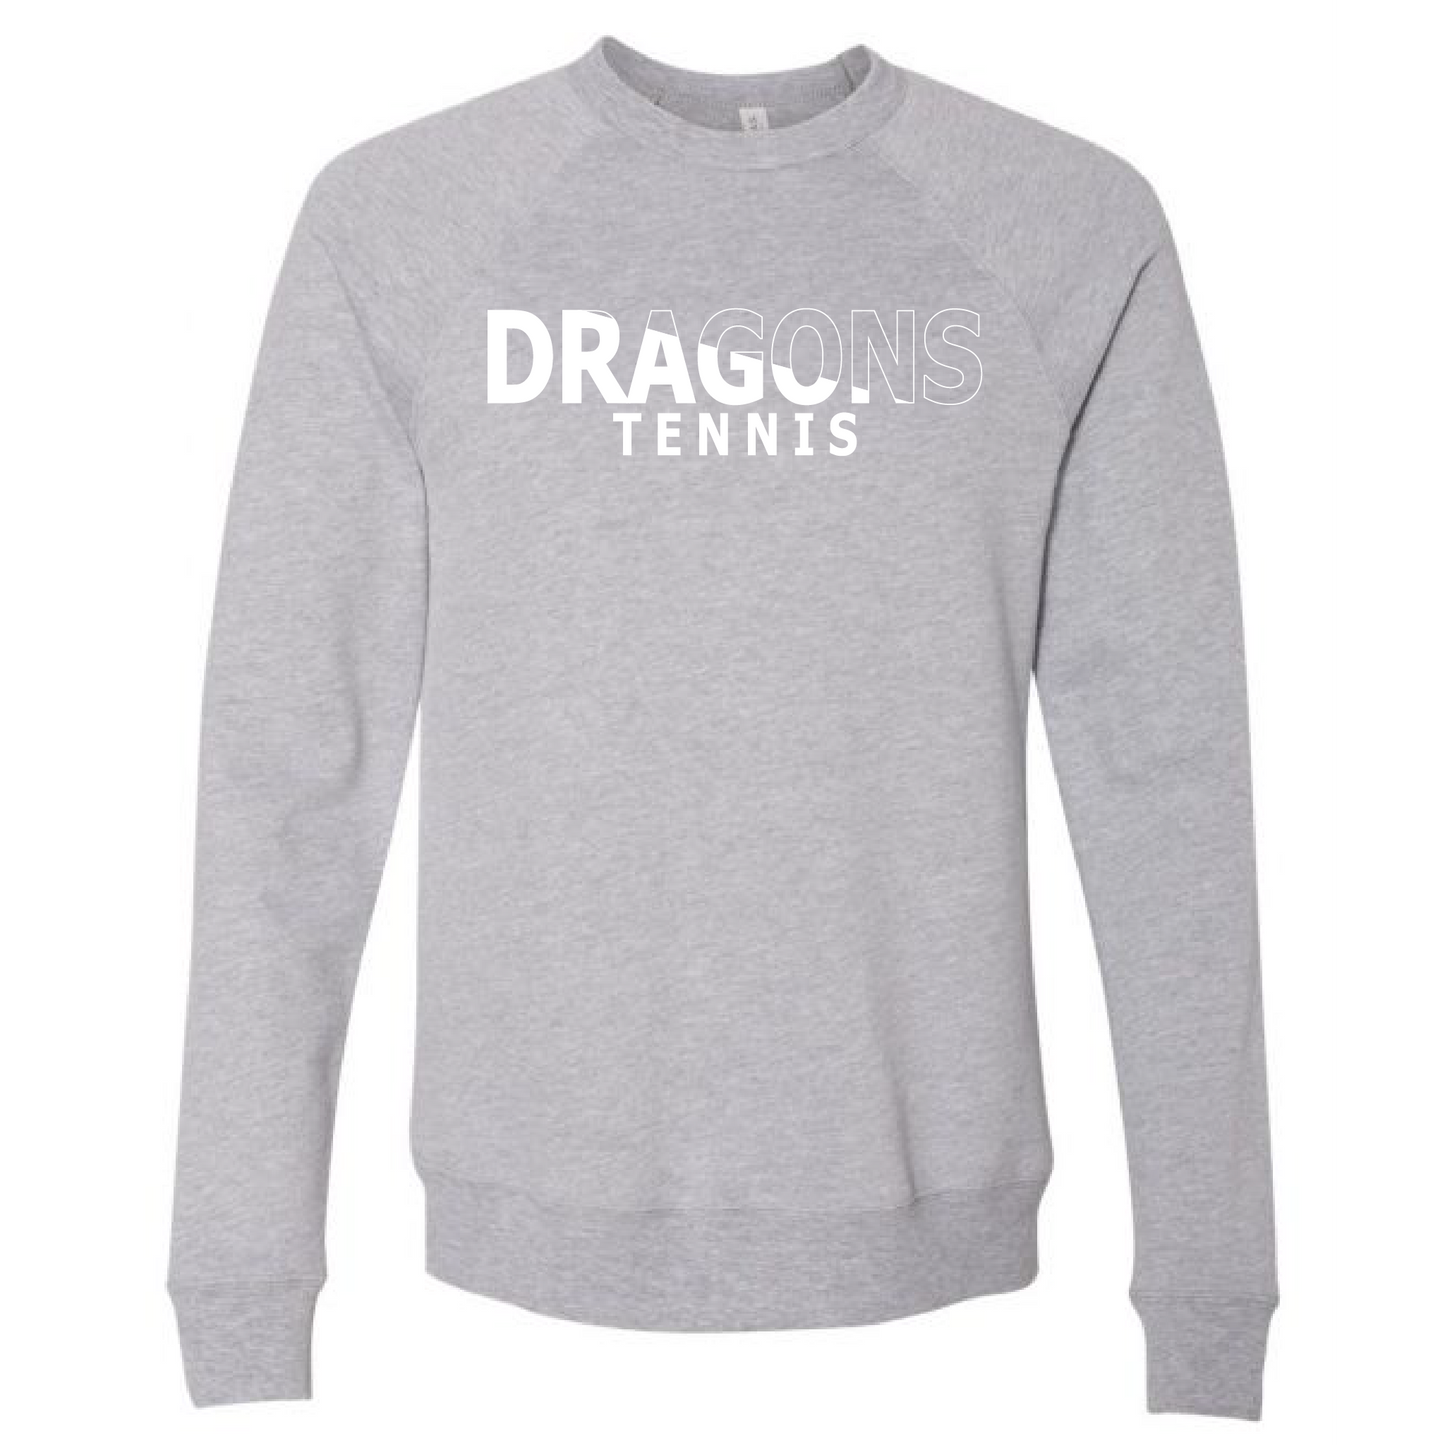 Unisex Sweatshirt - Dragons Tennis Slashed White